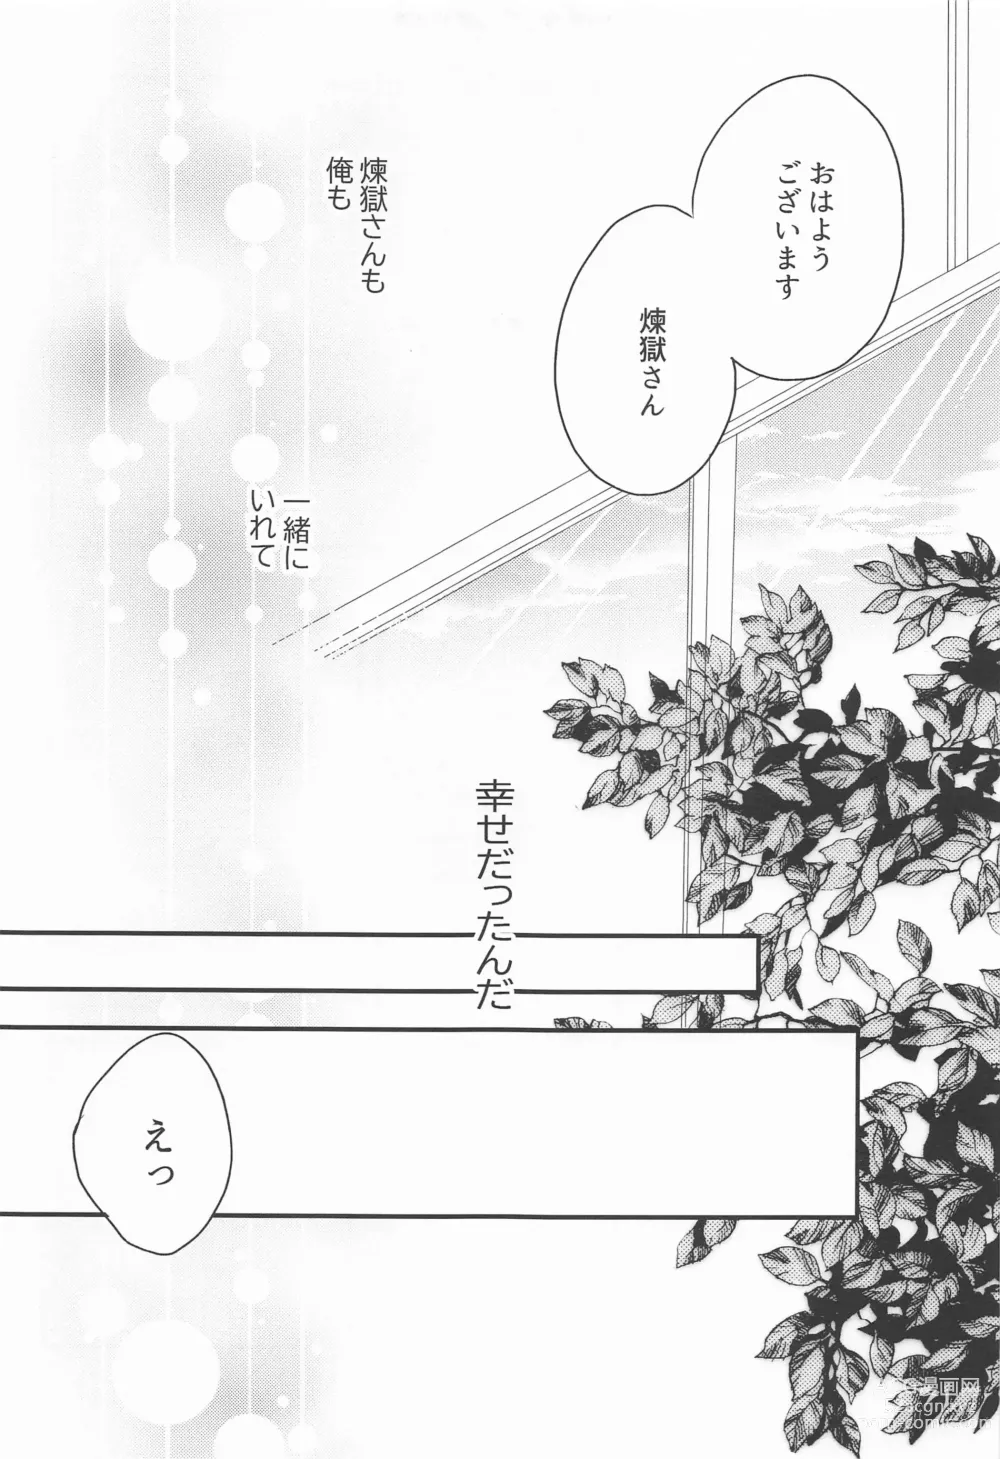 Page 6 of doujinshi Madogiwa no Rinjin To Fuyu no Hi